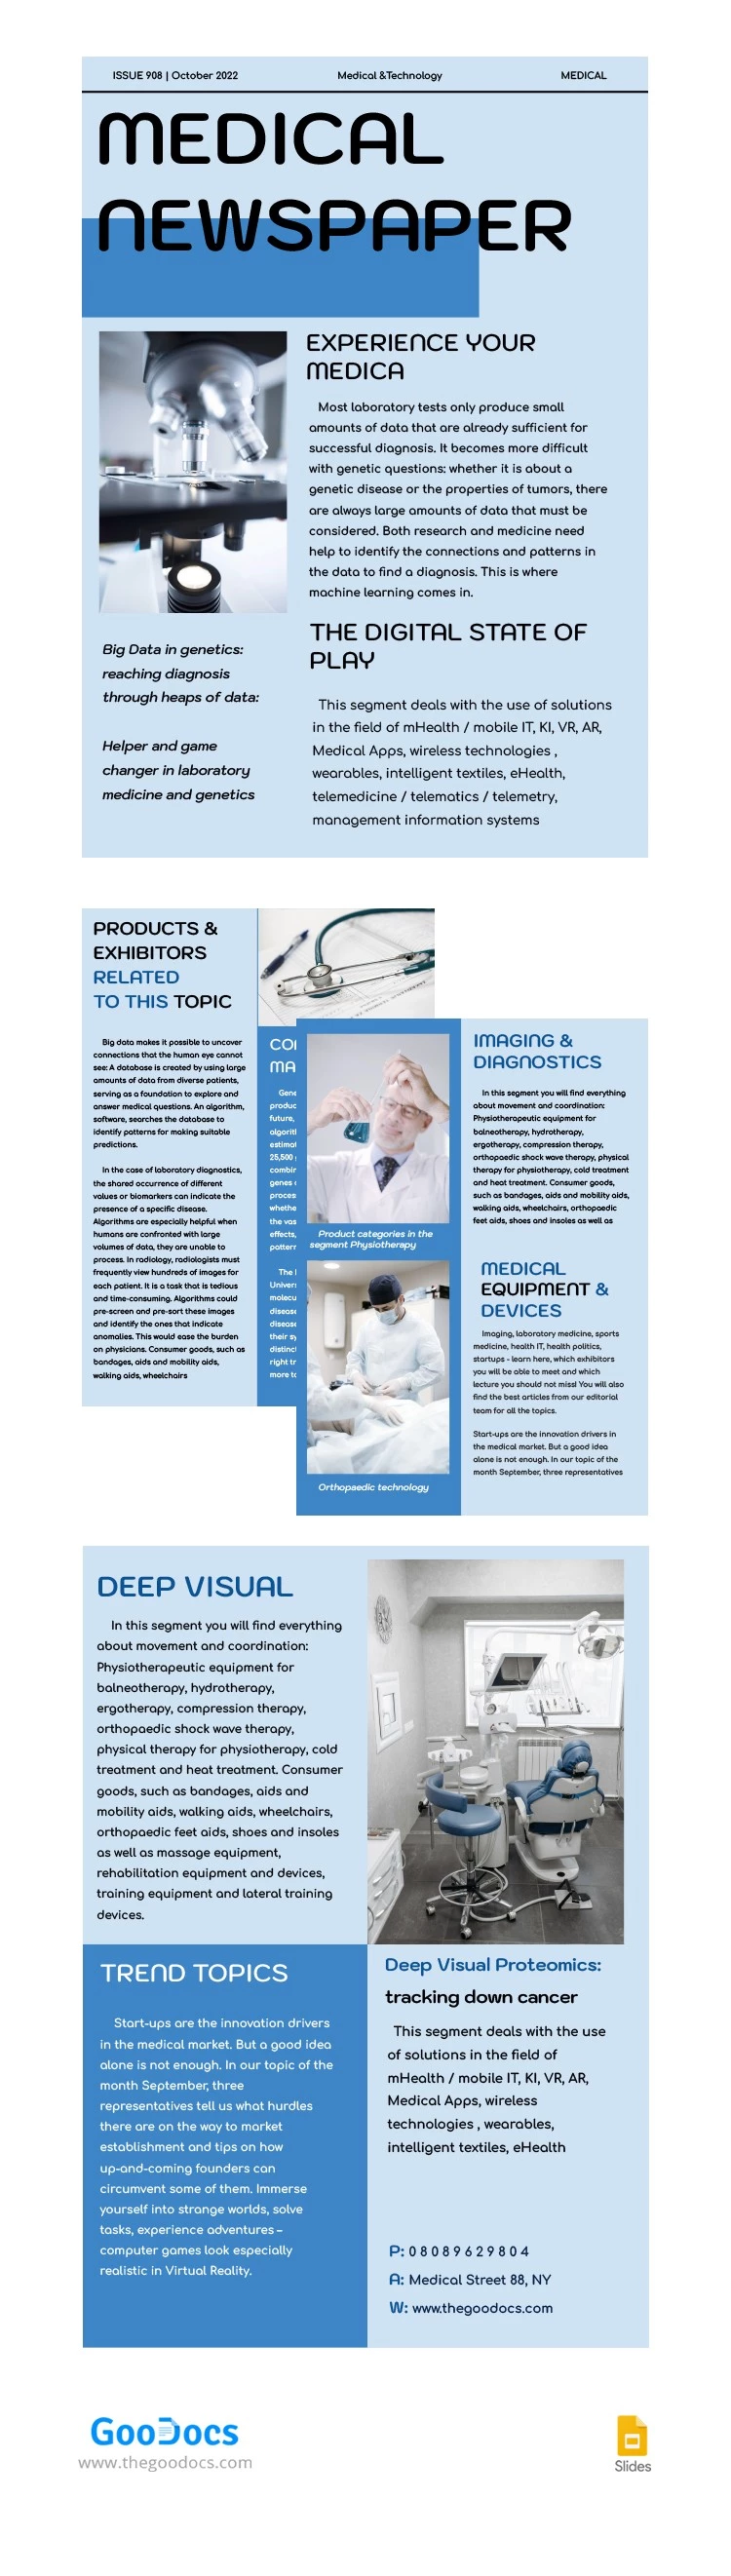 Blue Medical Newspaper - free Google Docs Template - 10064615